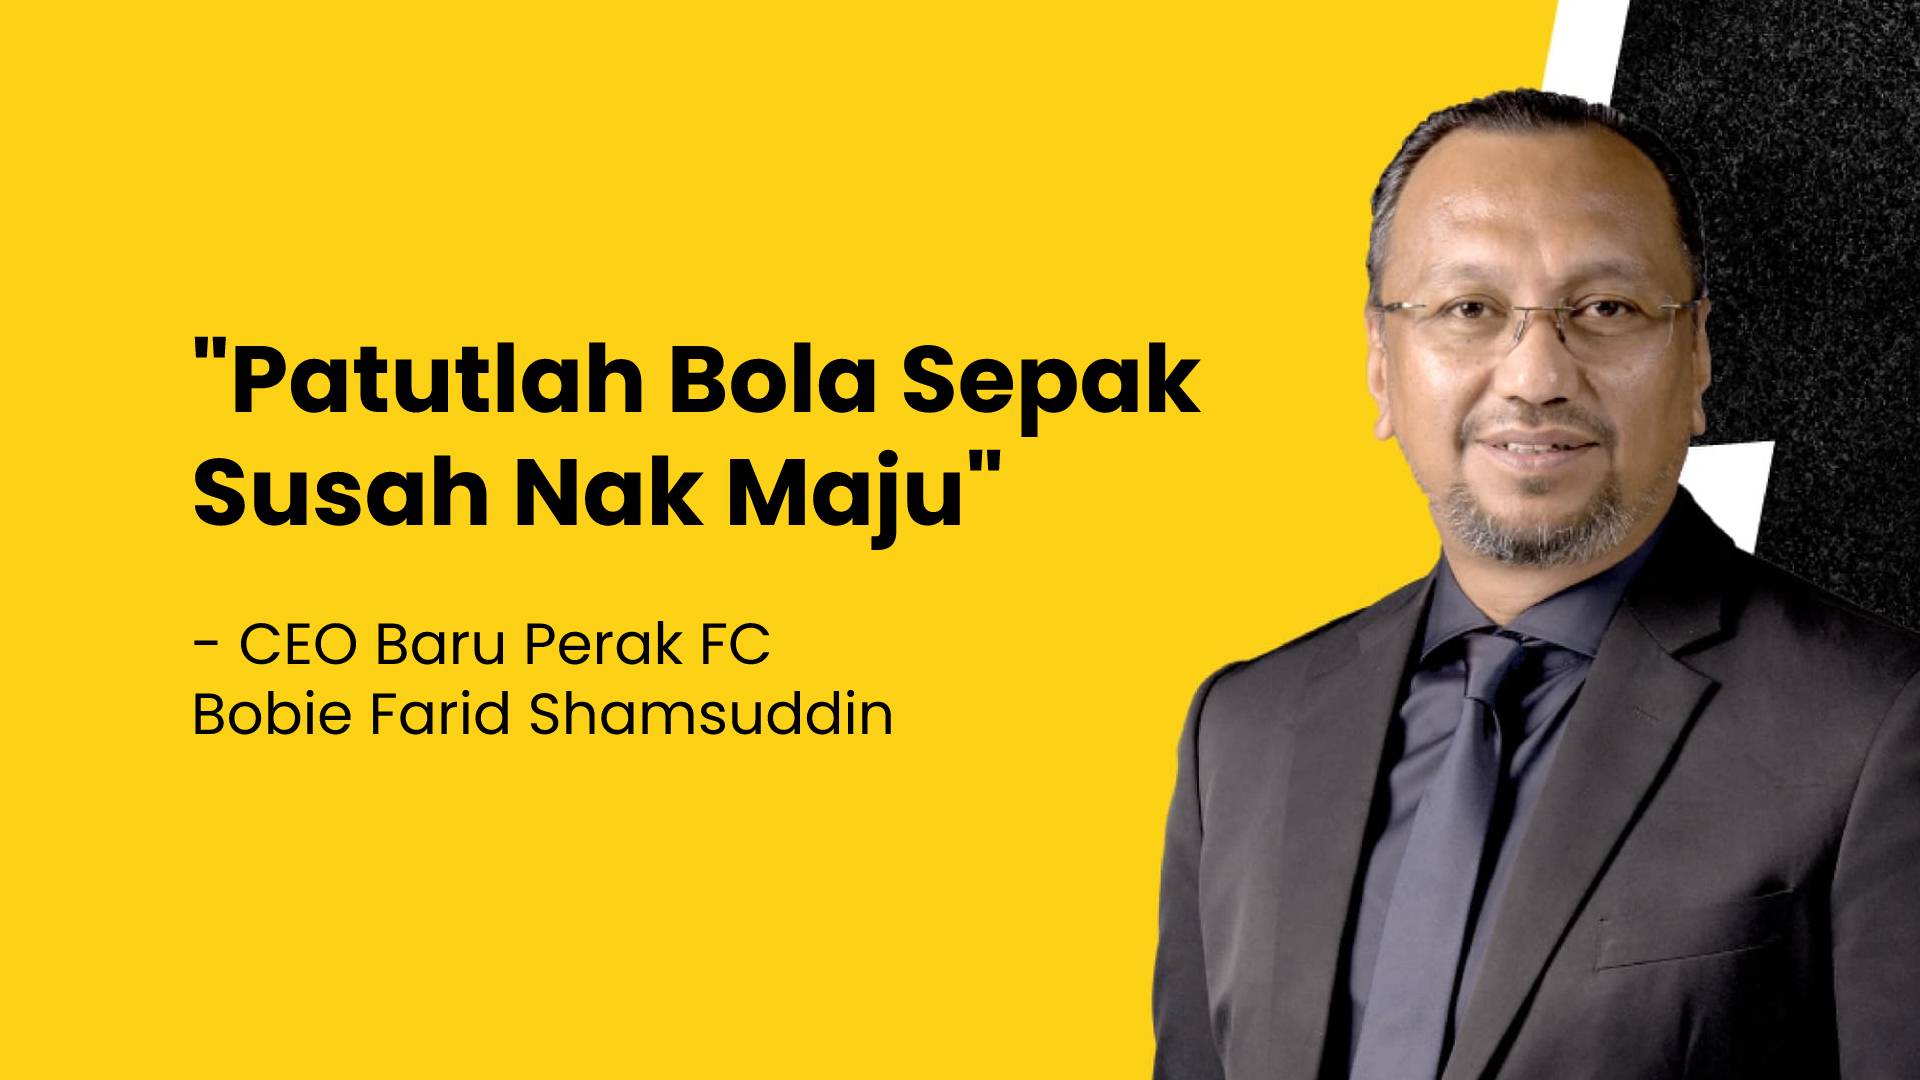 arie sham bola sepak perak "Patutlah Bola Sepak Susah Nak Maju" - CEO Baru Perak FC